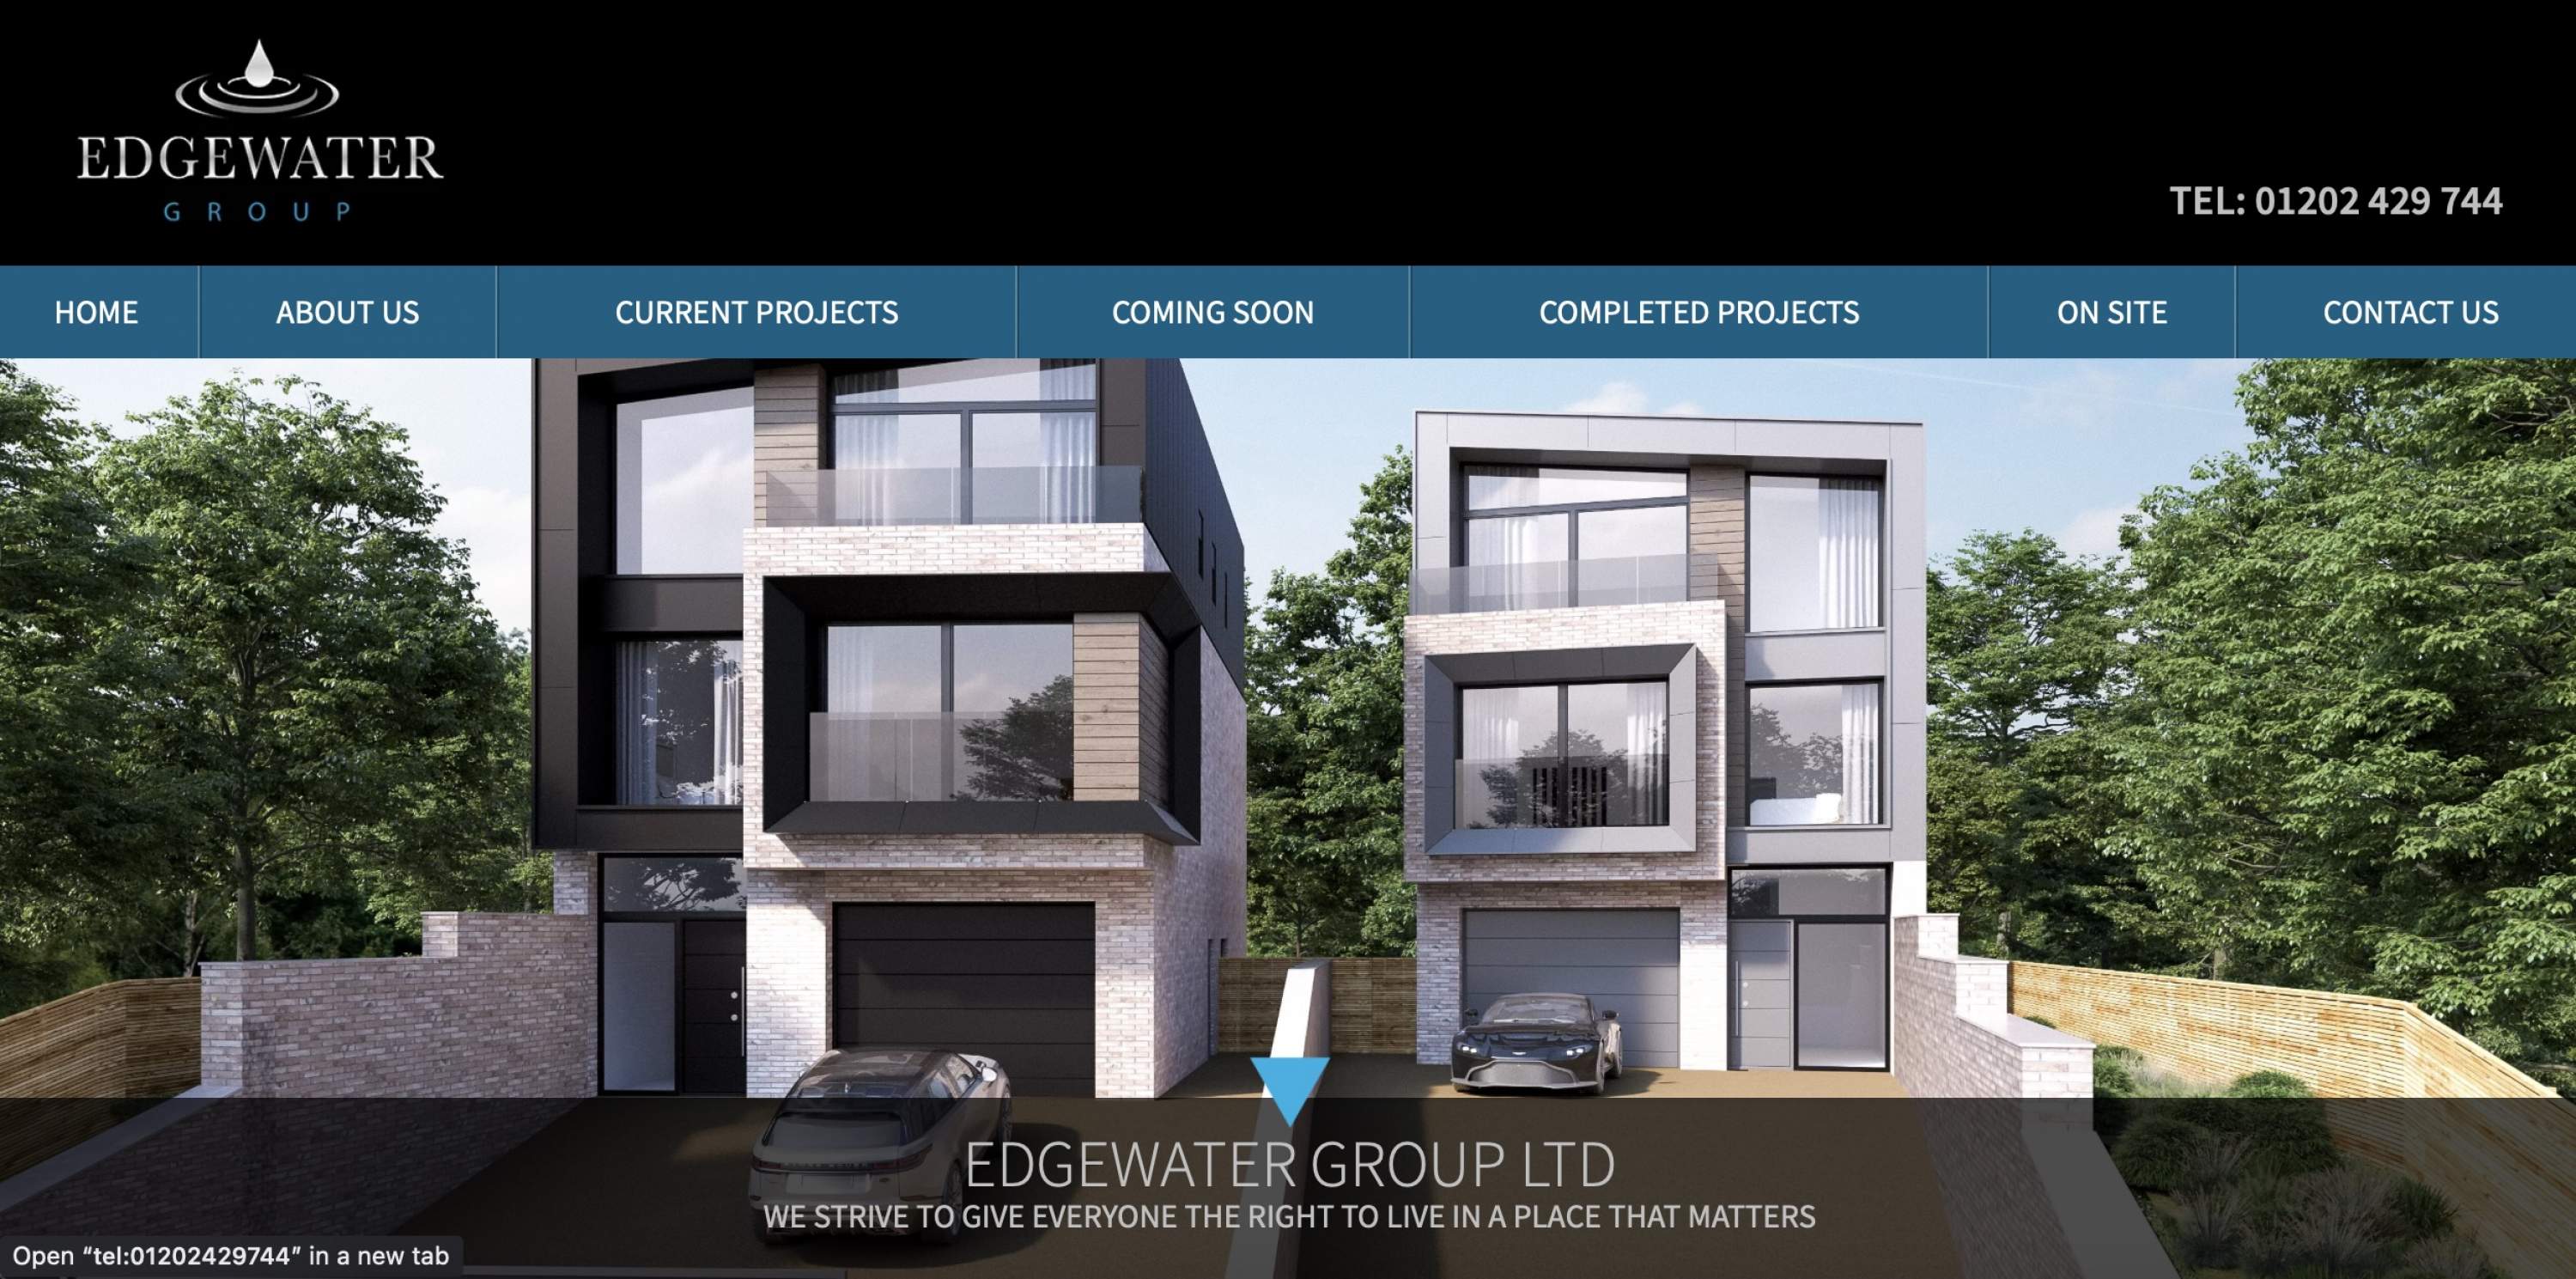 Edgewater Group